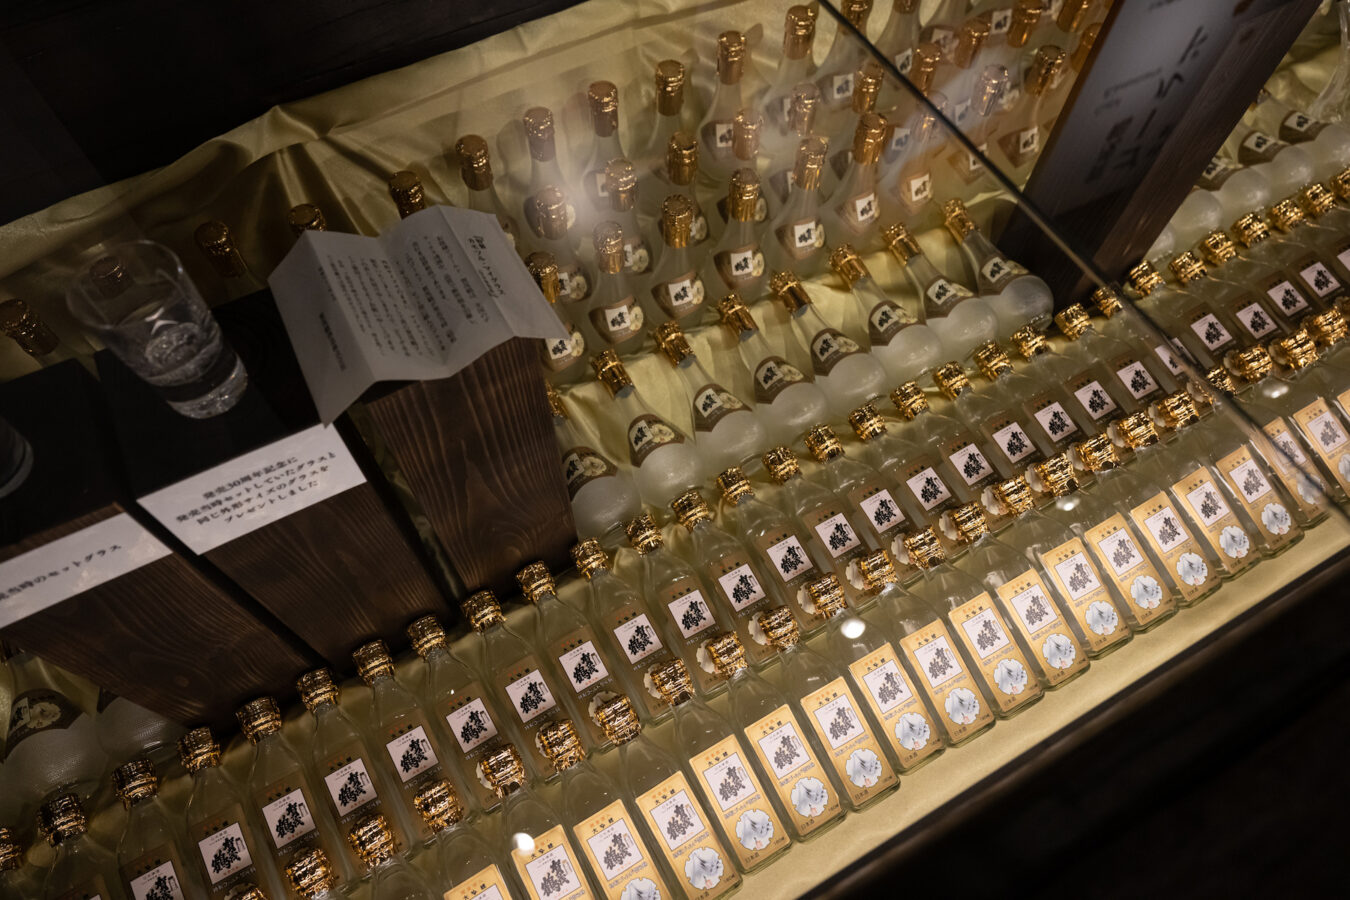 Kamotsuru Gold cabinet at Kamotsuru Brewery Museum